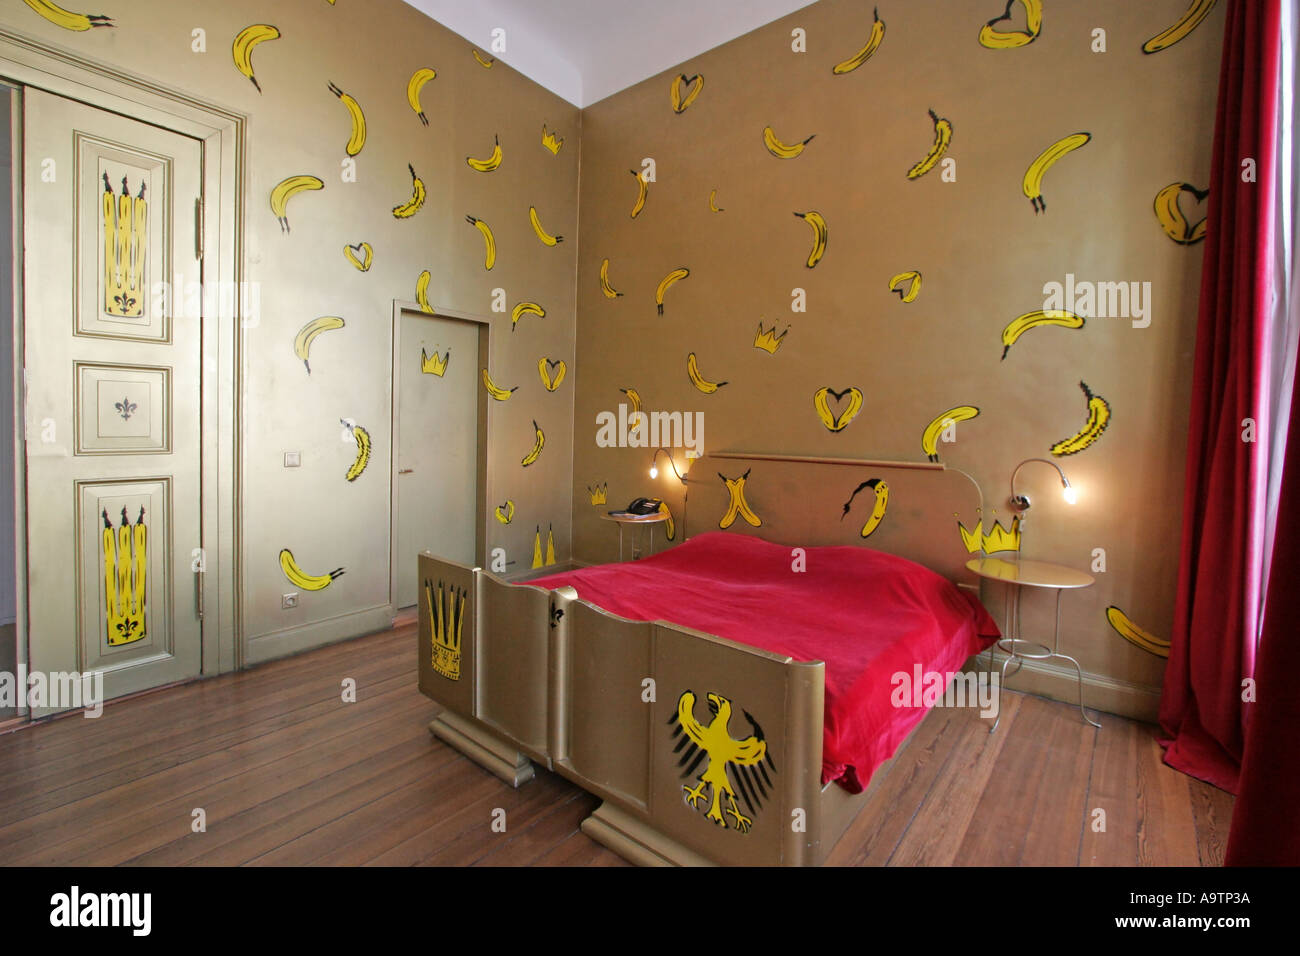 Berlin artist Hotel Luise interieur room design by Thomas Baumgaertel Stock Photo